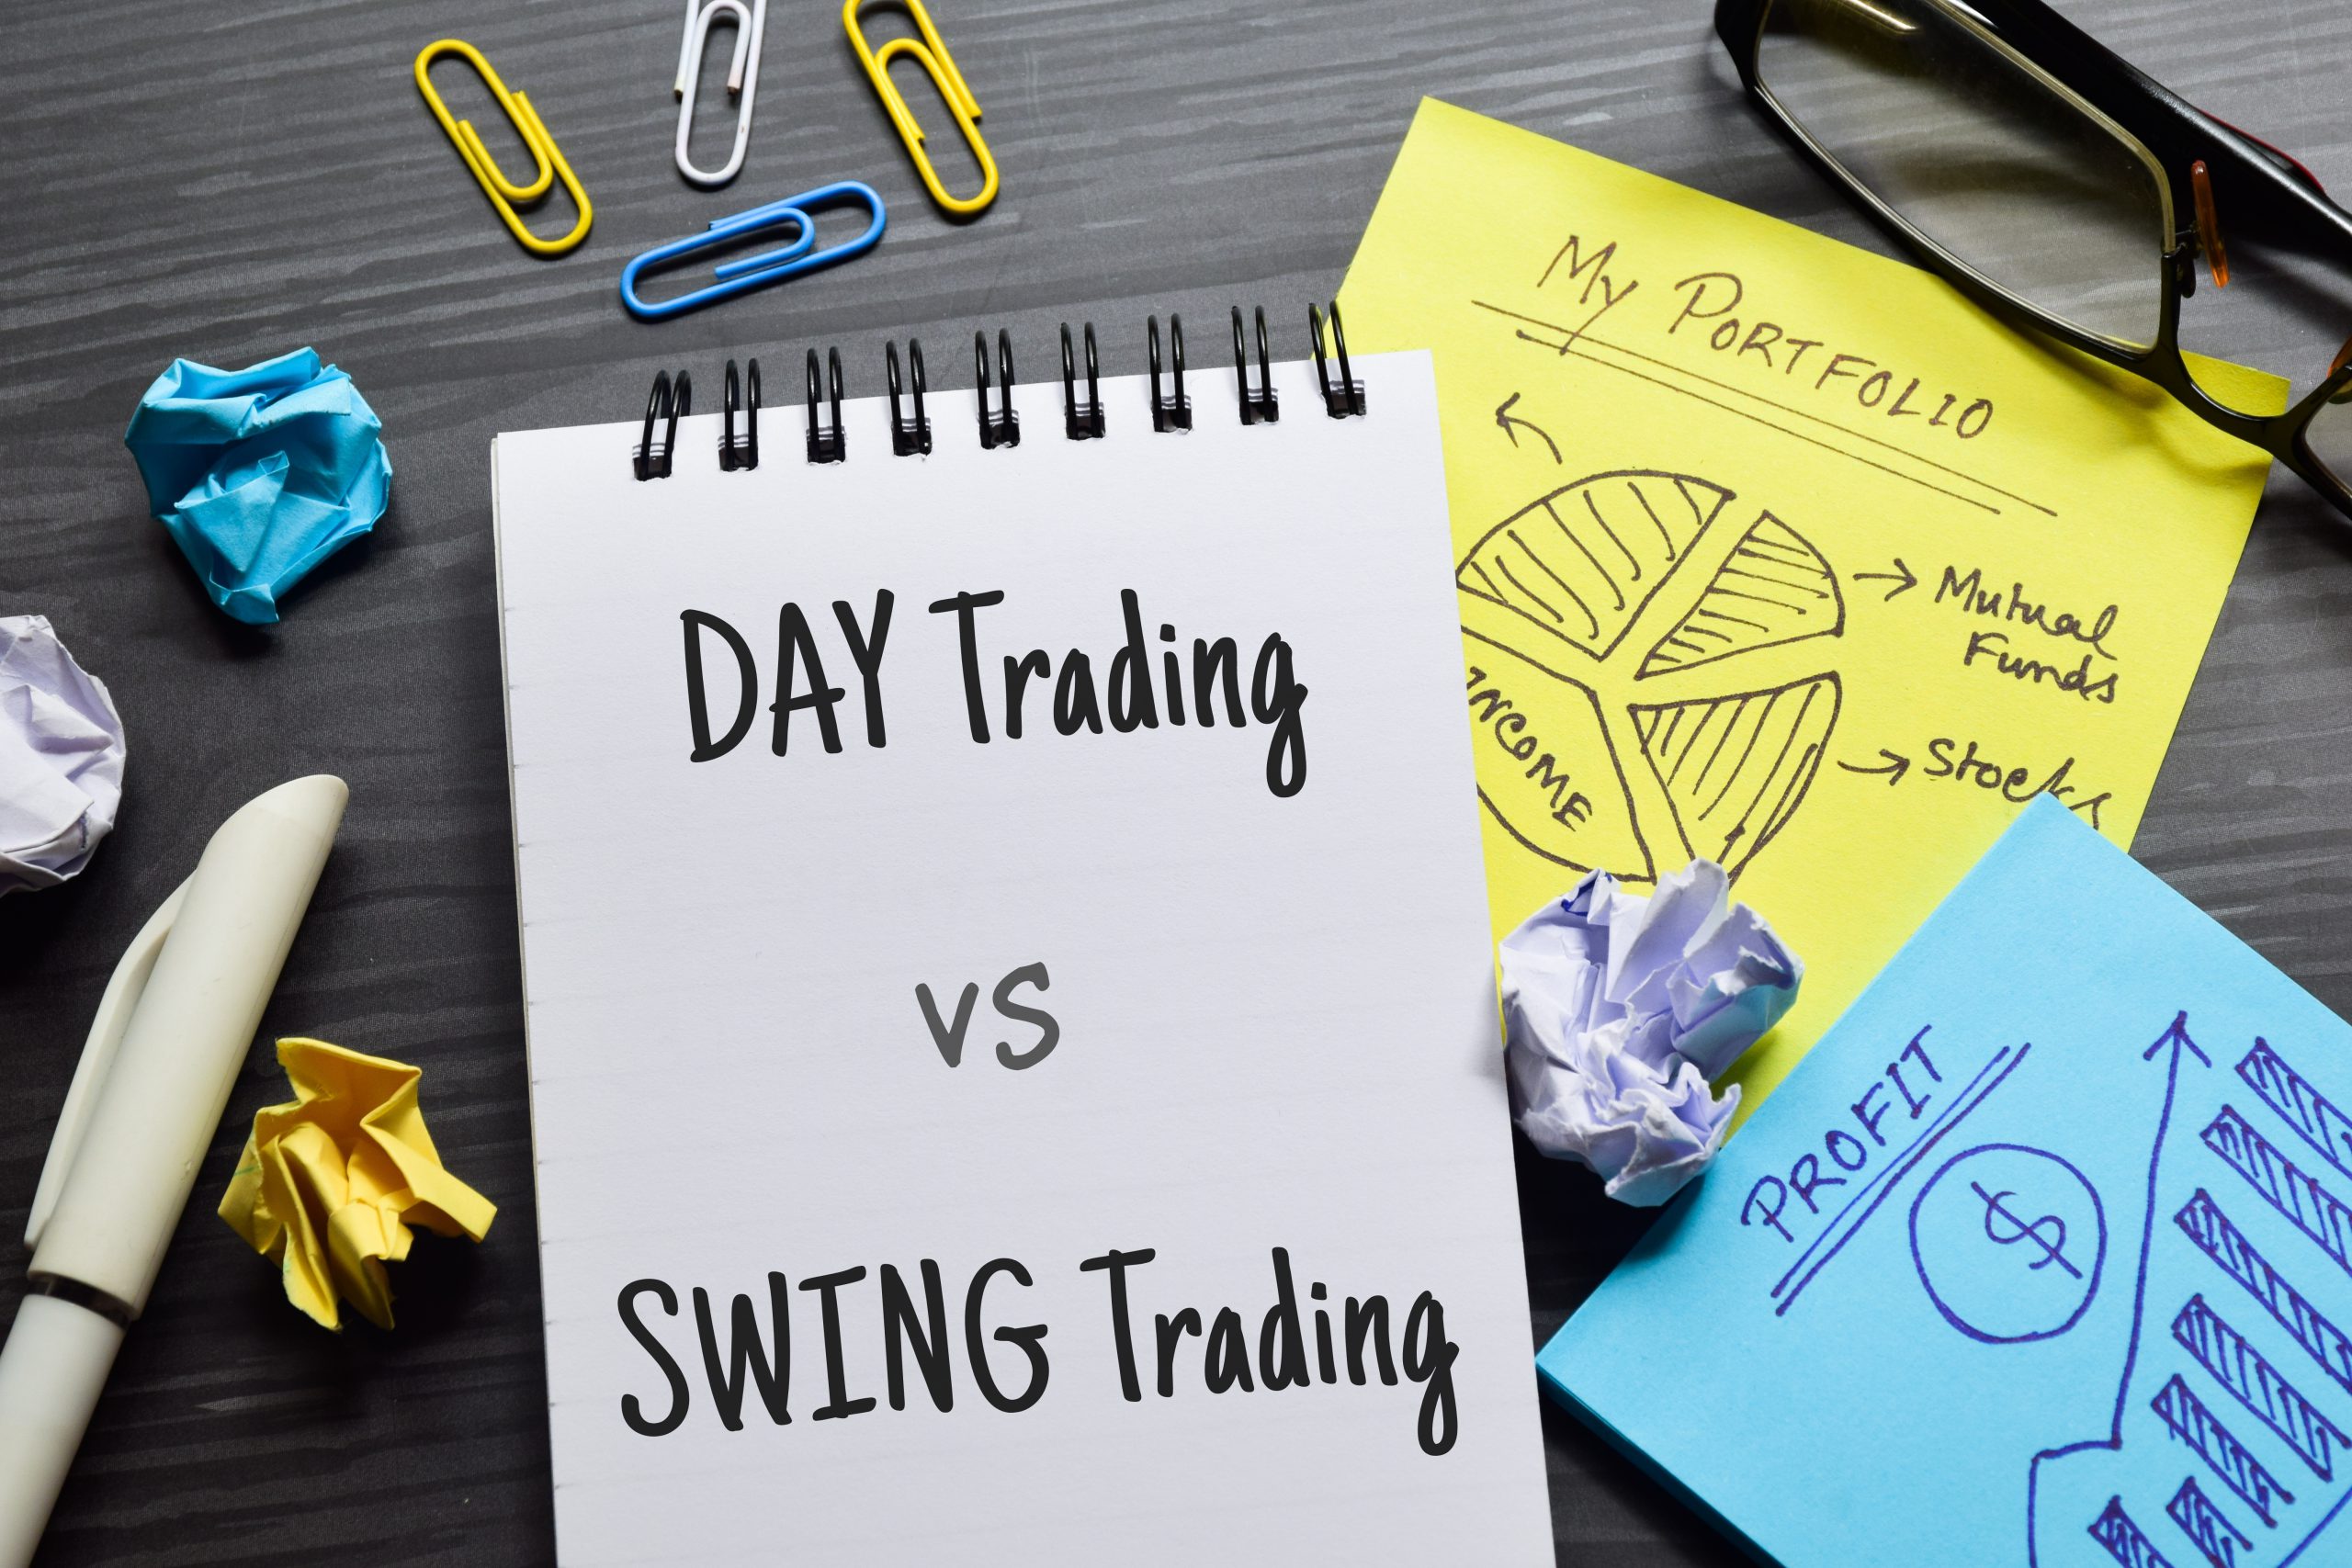 swing trading vs day trading